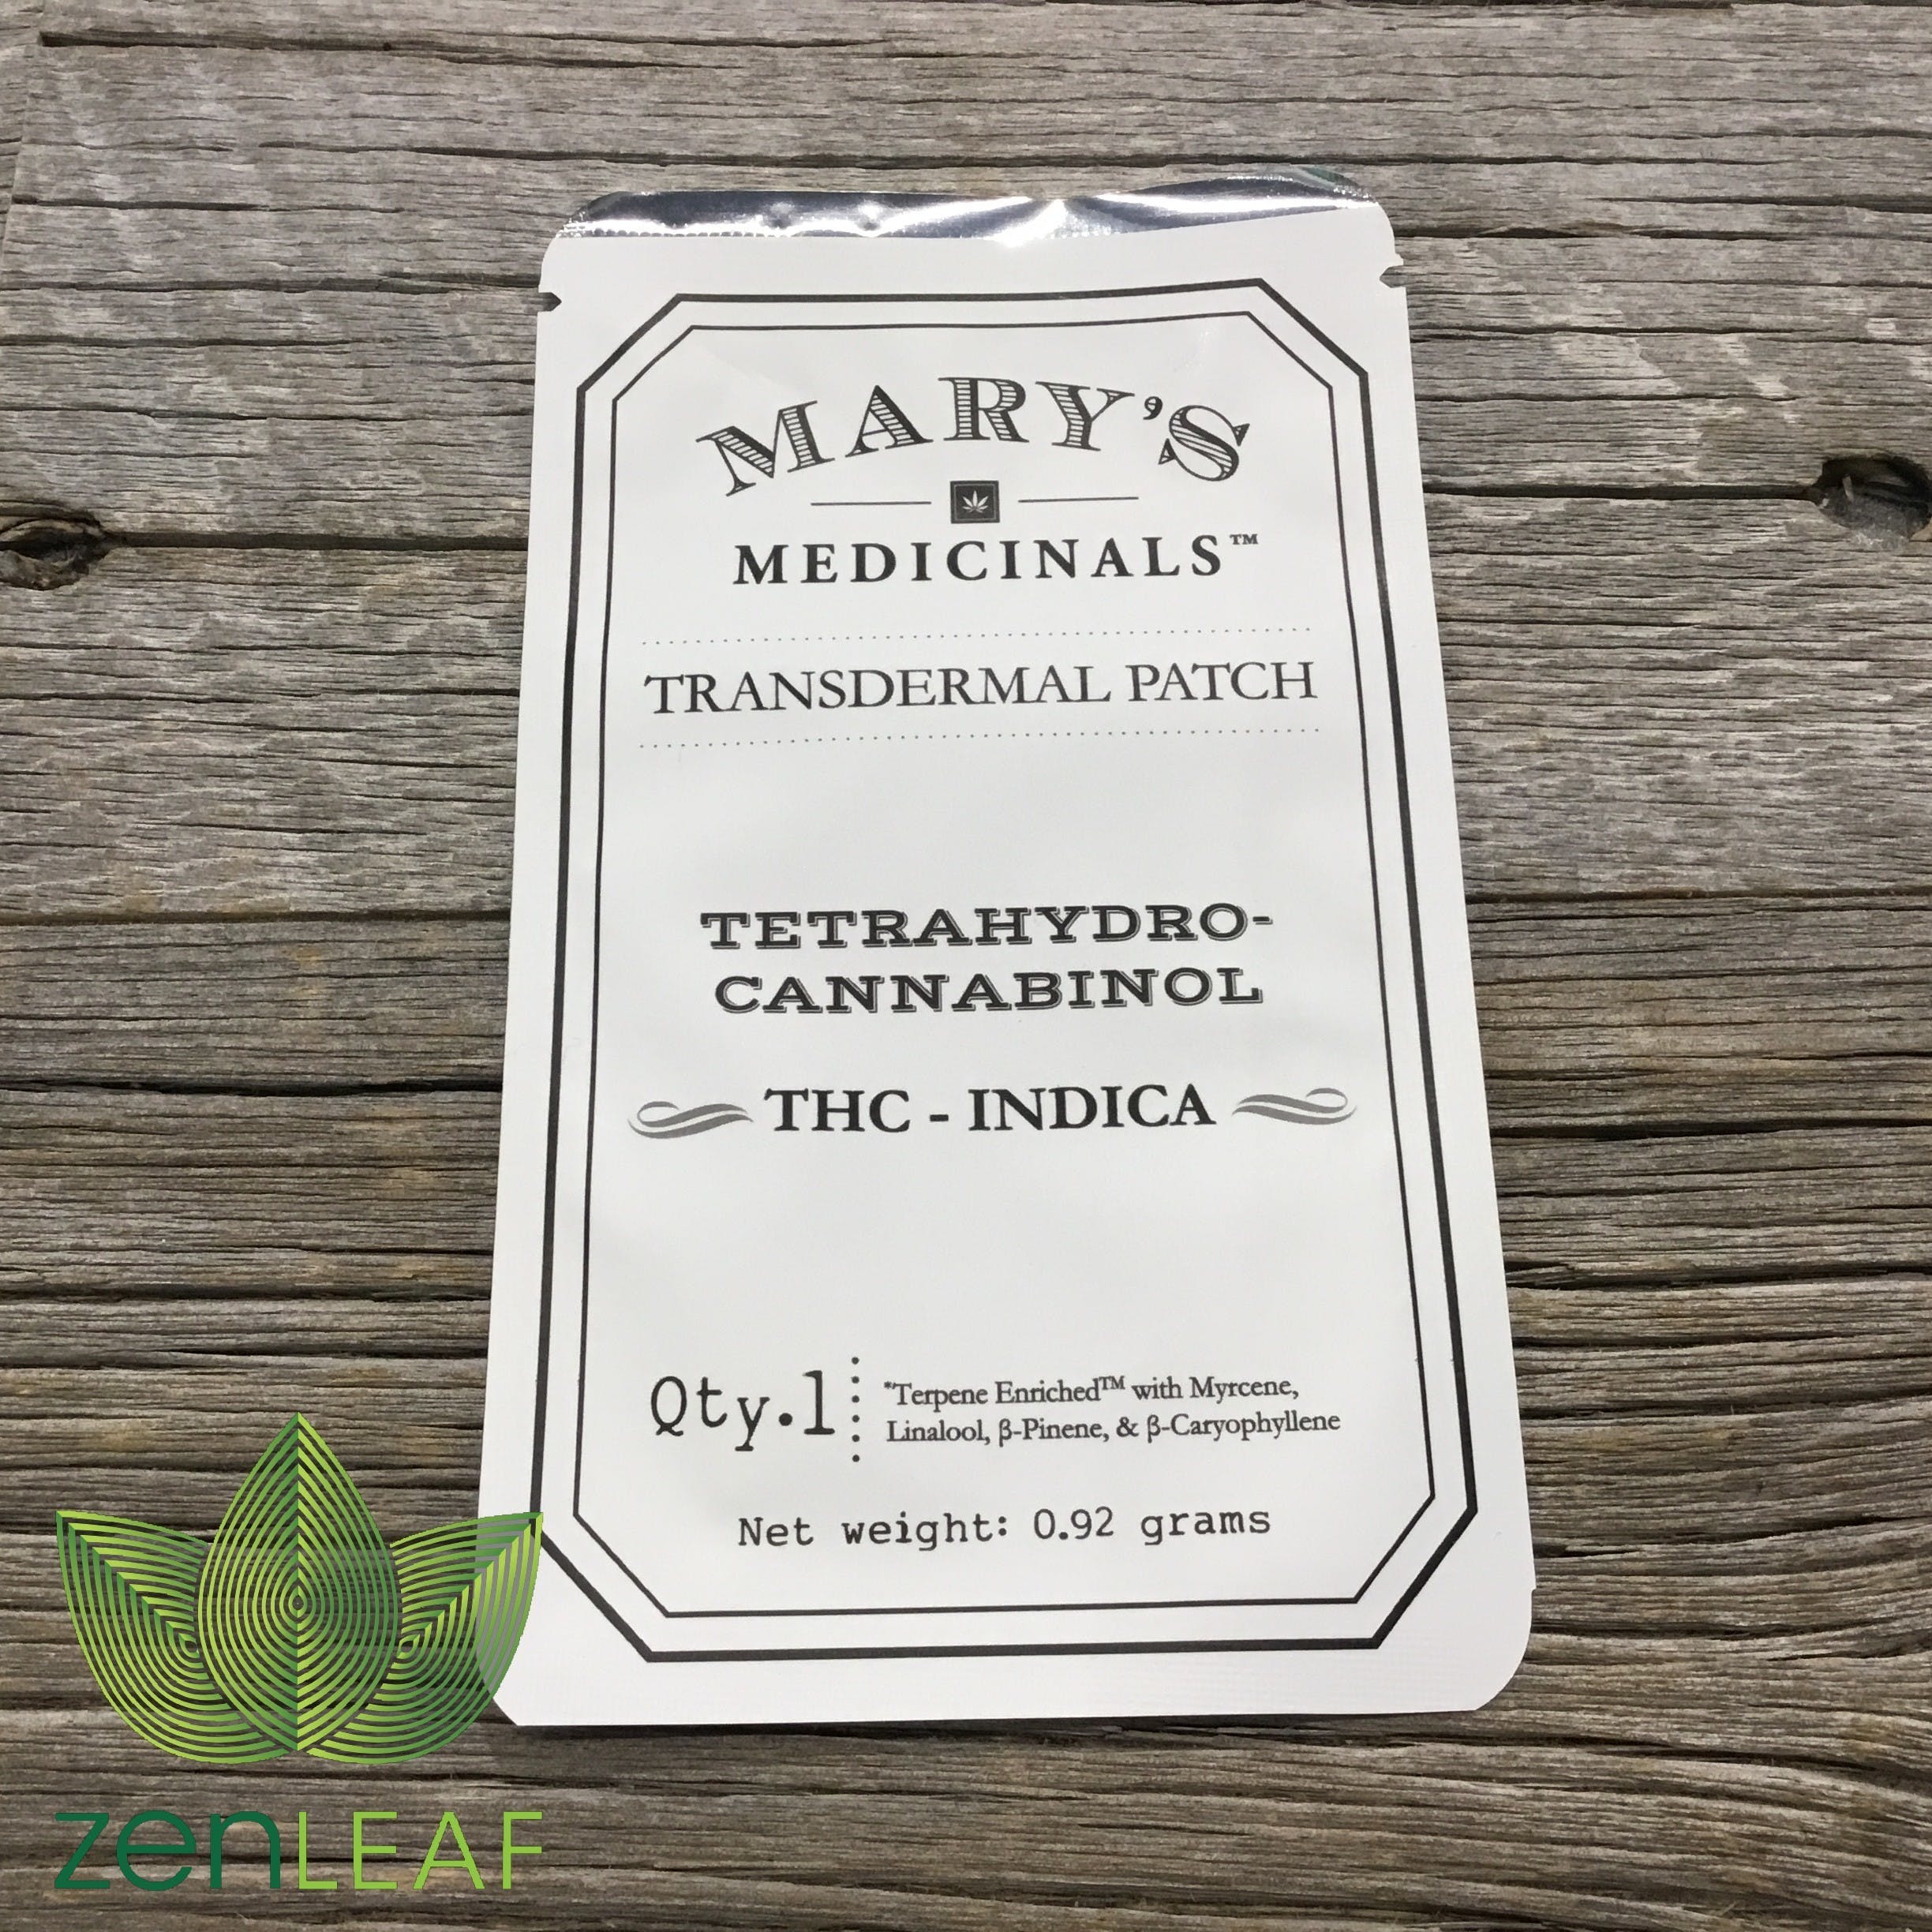 marijuana-dispensaries-2290-old-washington-road-unit-12383-waldorf-marys-transdermal-patch-thc-indica